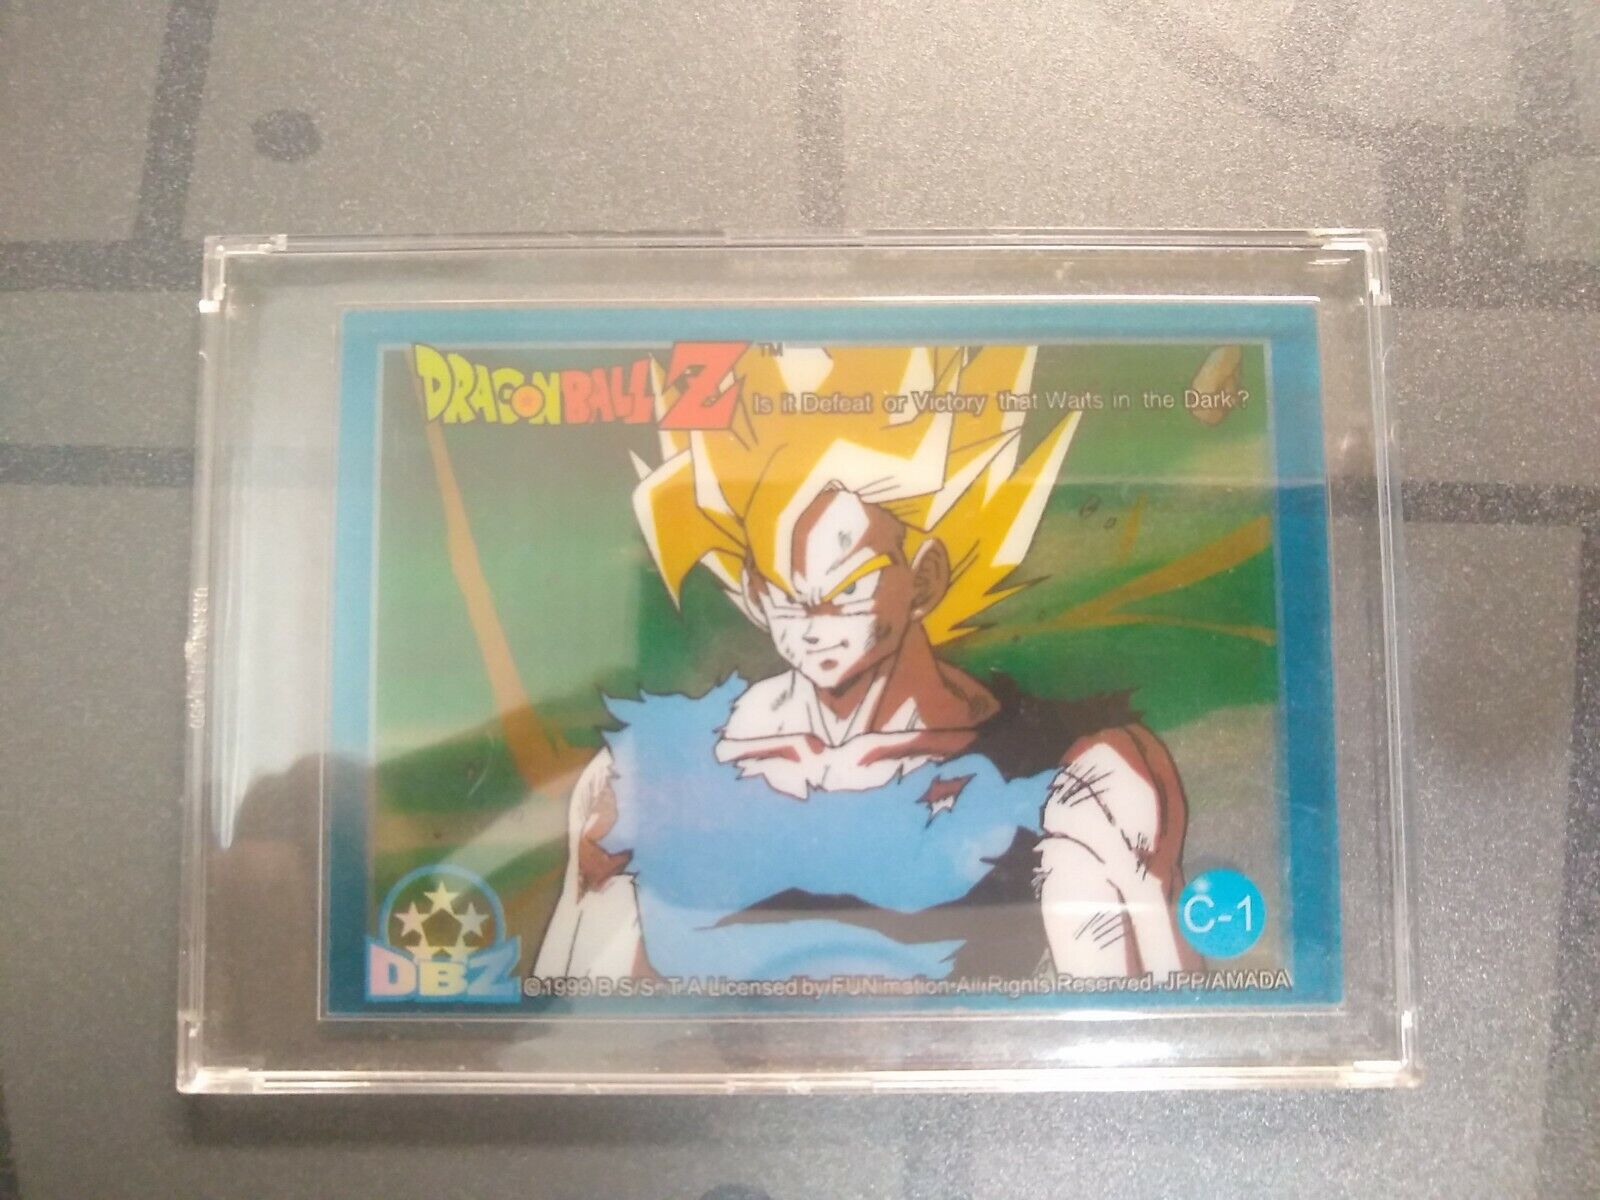 1999 Dragonball Z Clear Card C-1 Super Saiyan Goku JPP/AMADA Artbox Series 3